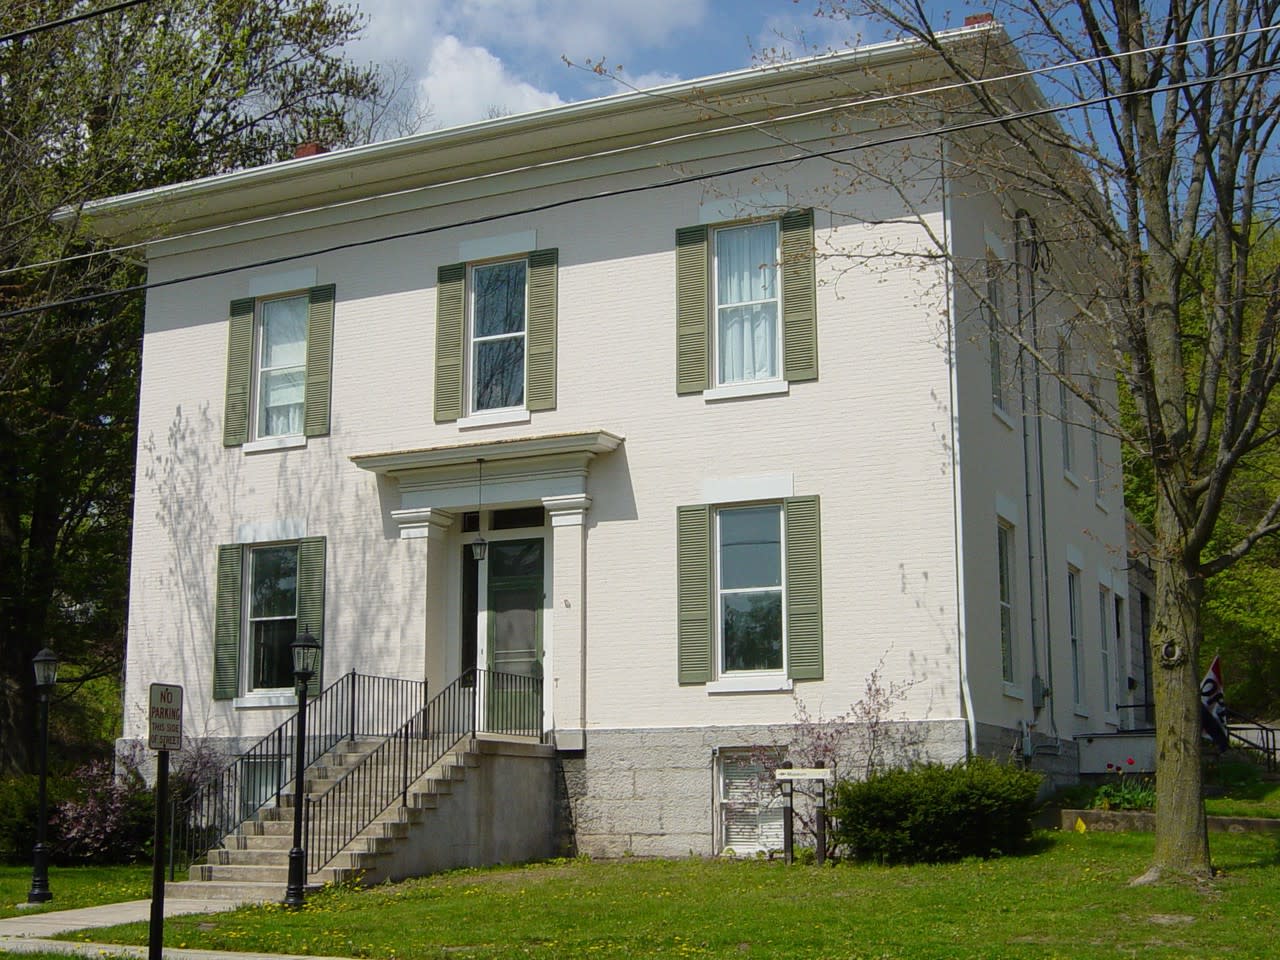 Wayne County Historical Museum